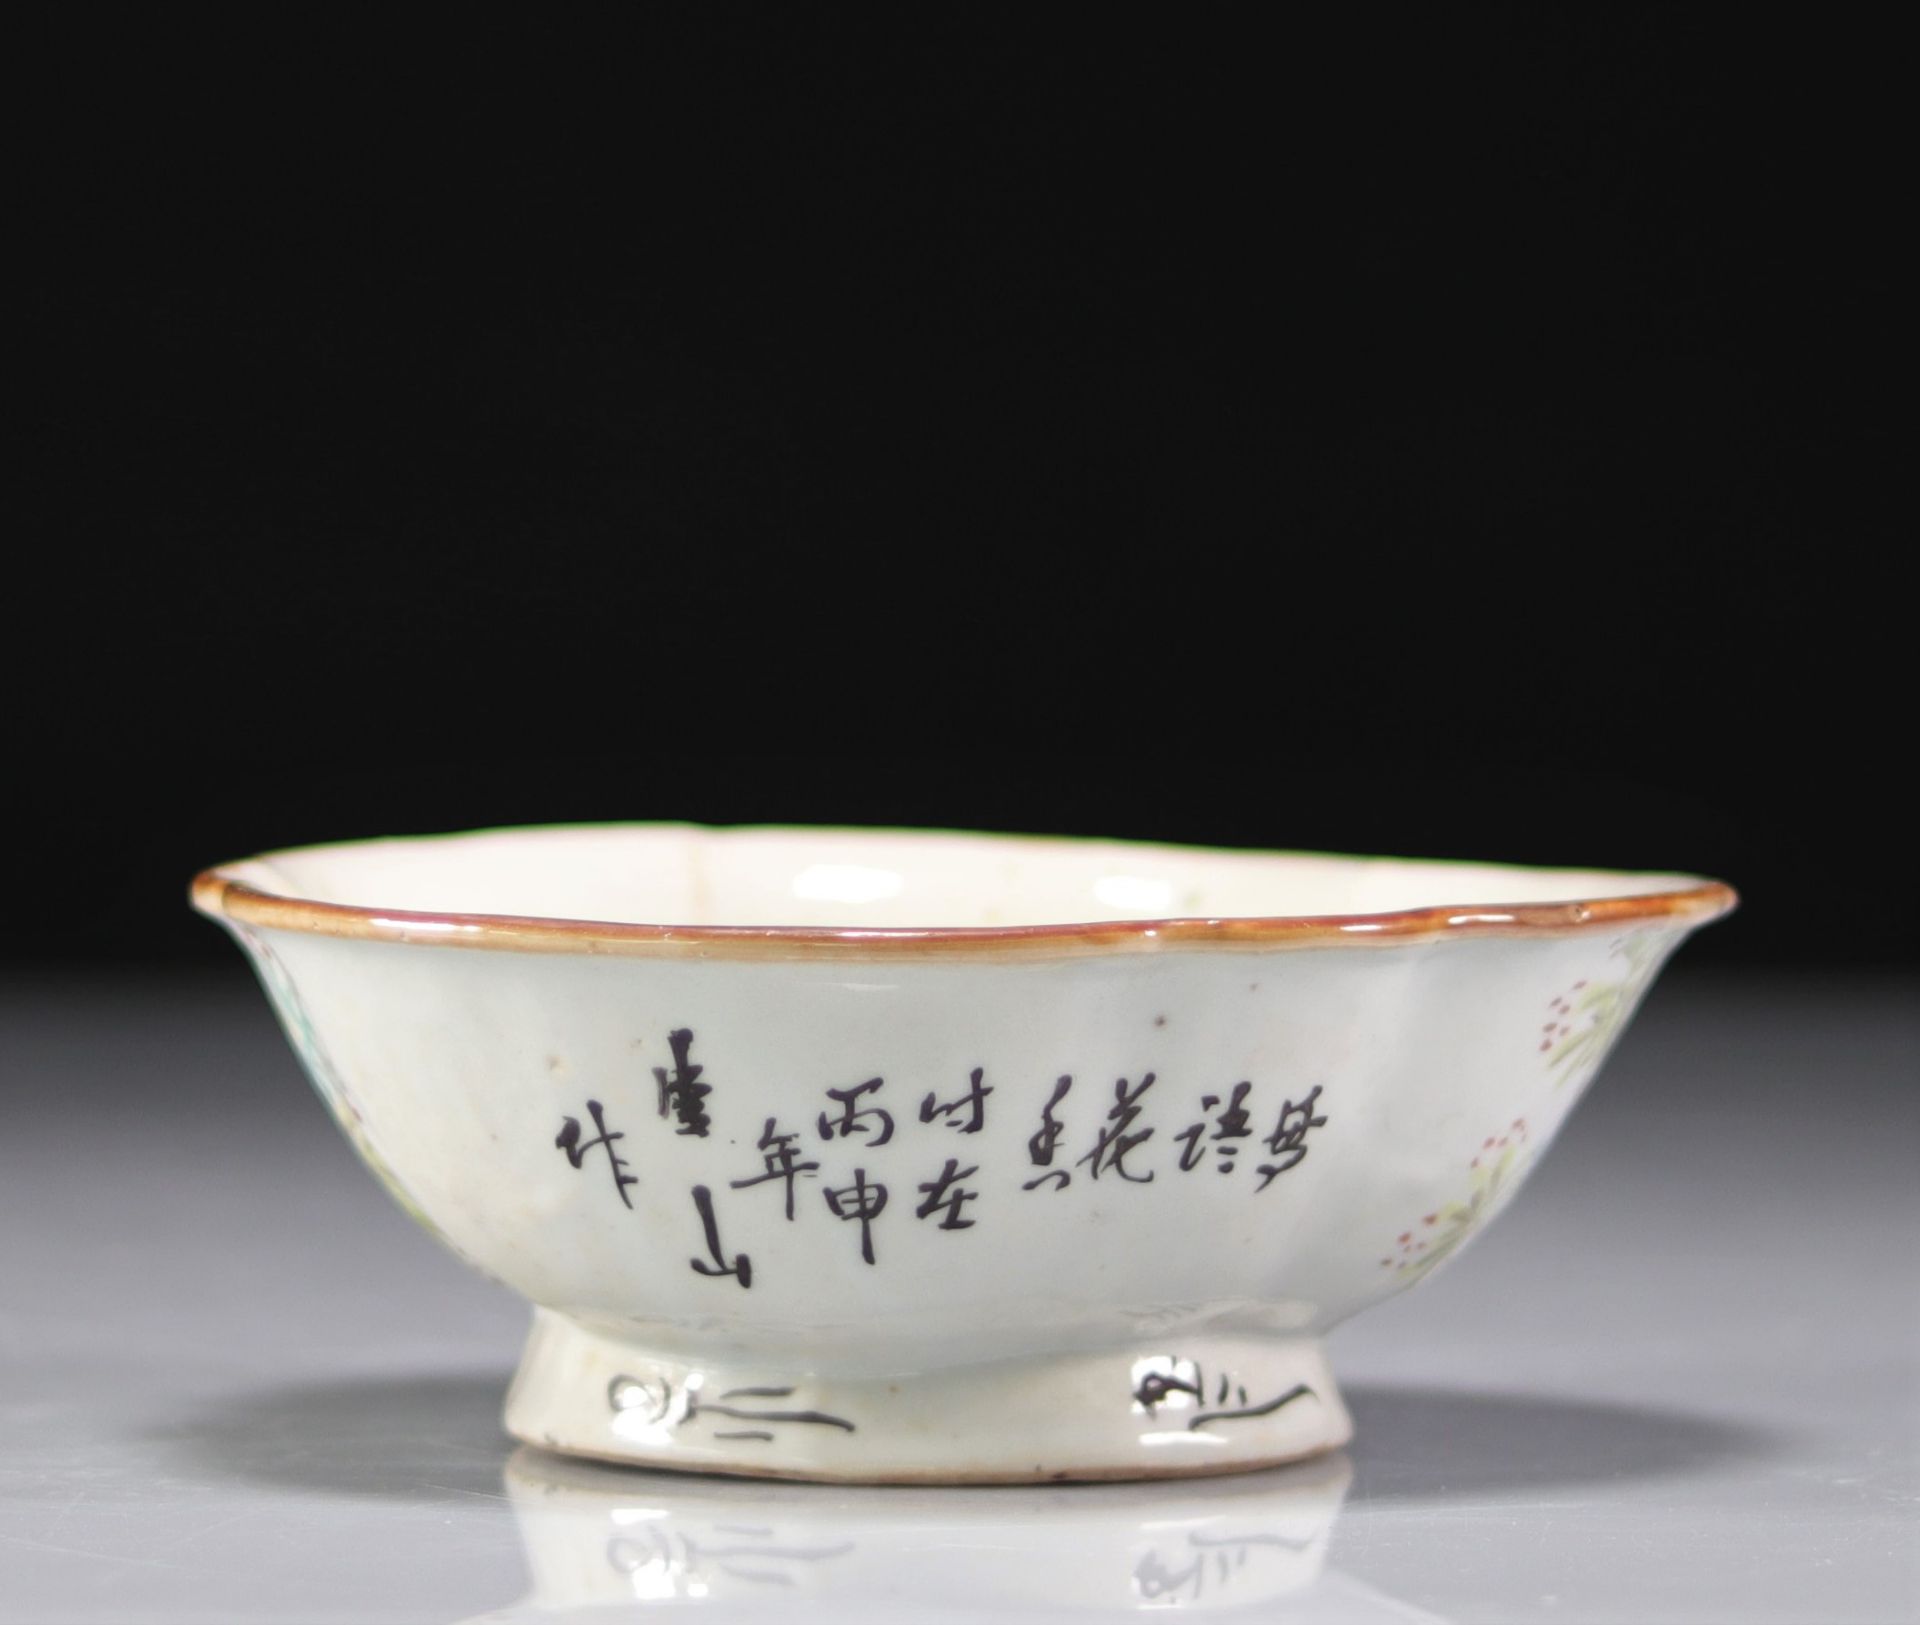 Artist's Signature Chinese Porcelain Dish - Image 2 of 6